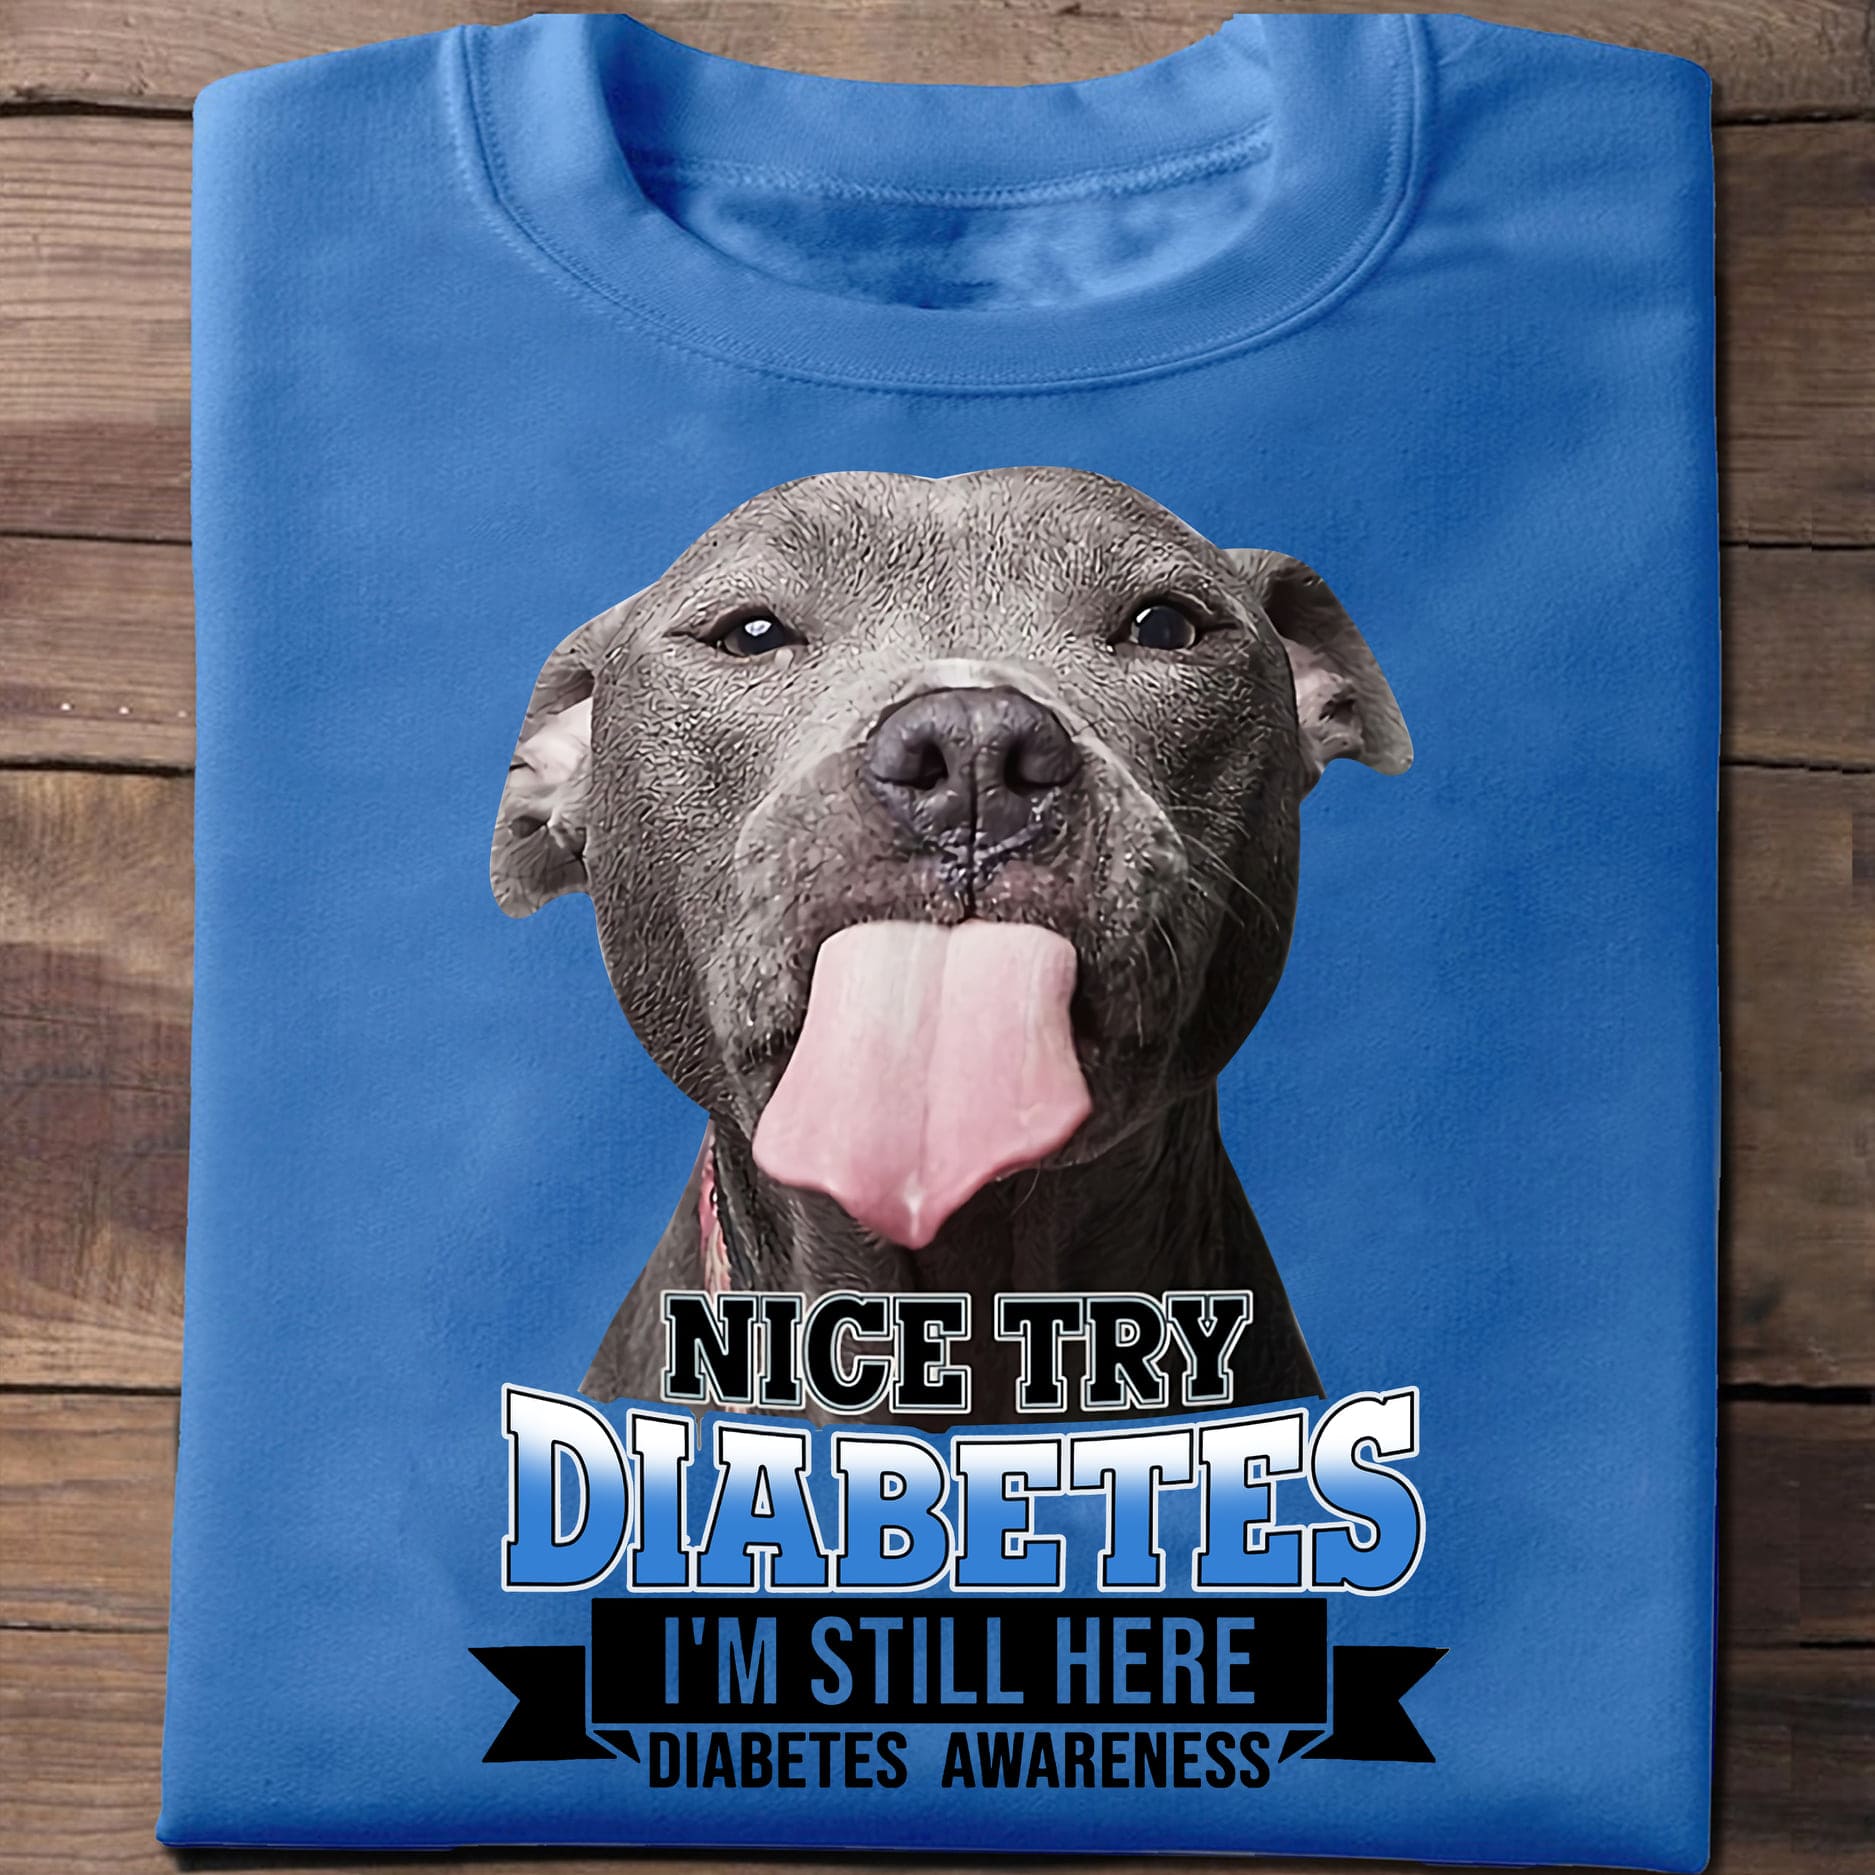 Nice try Diabetes I'm still here - Diabetes awareness, Funny Pitbull T-shirt